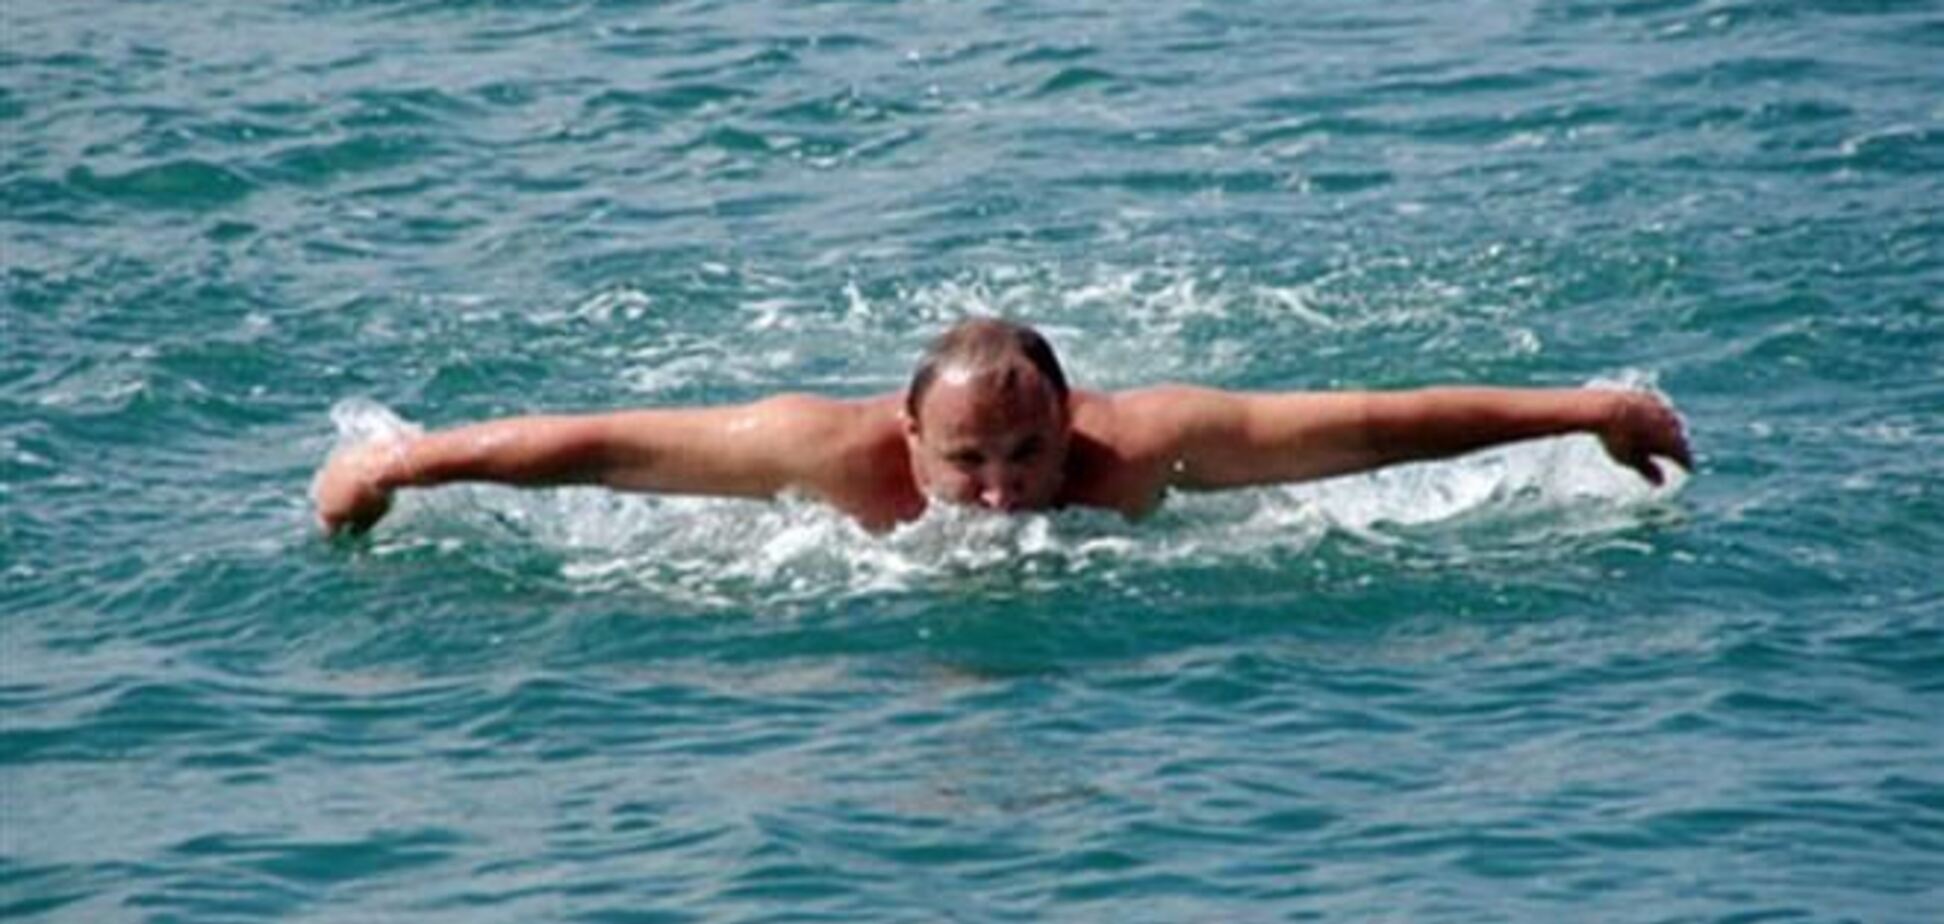 Пловец из Севастополя совершит заплыв за мир в Сирии